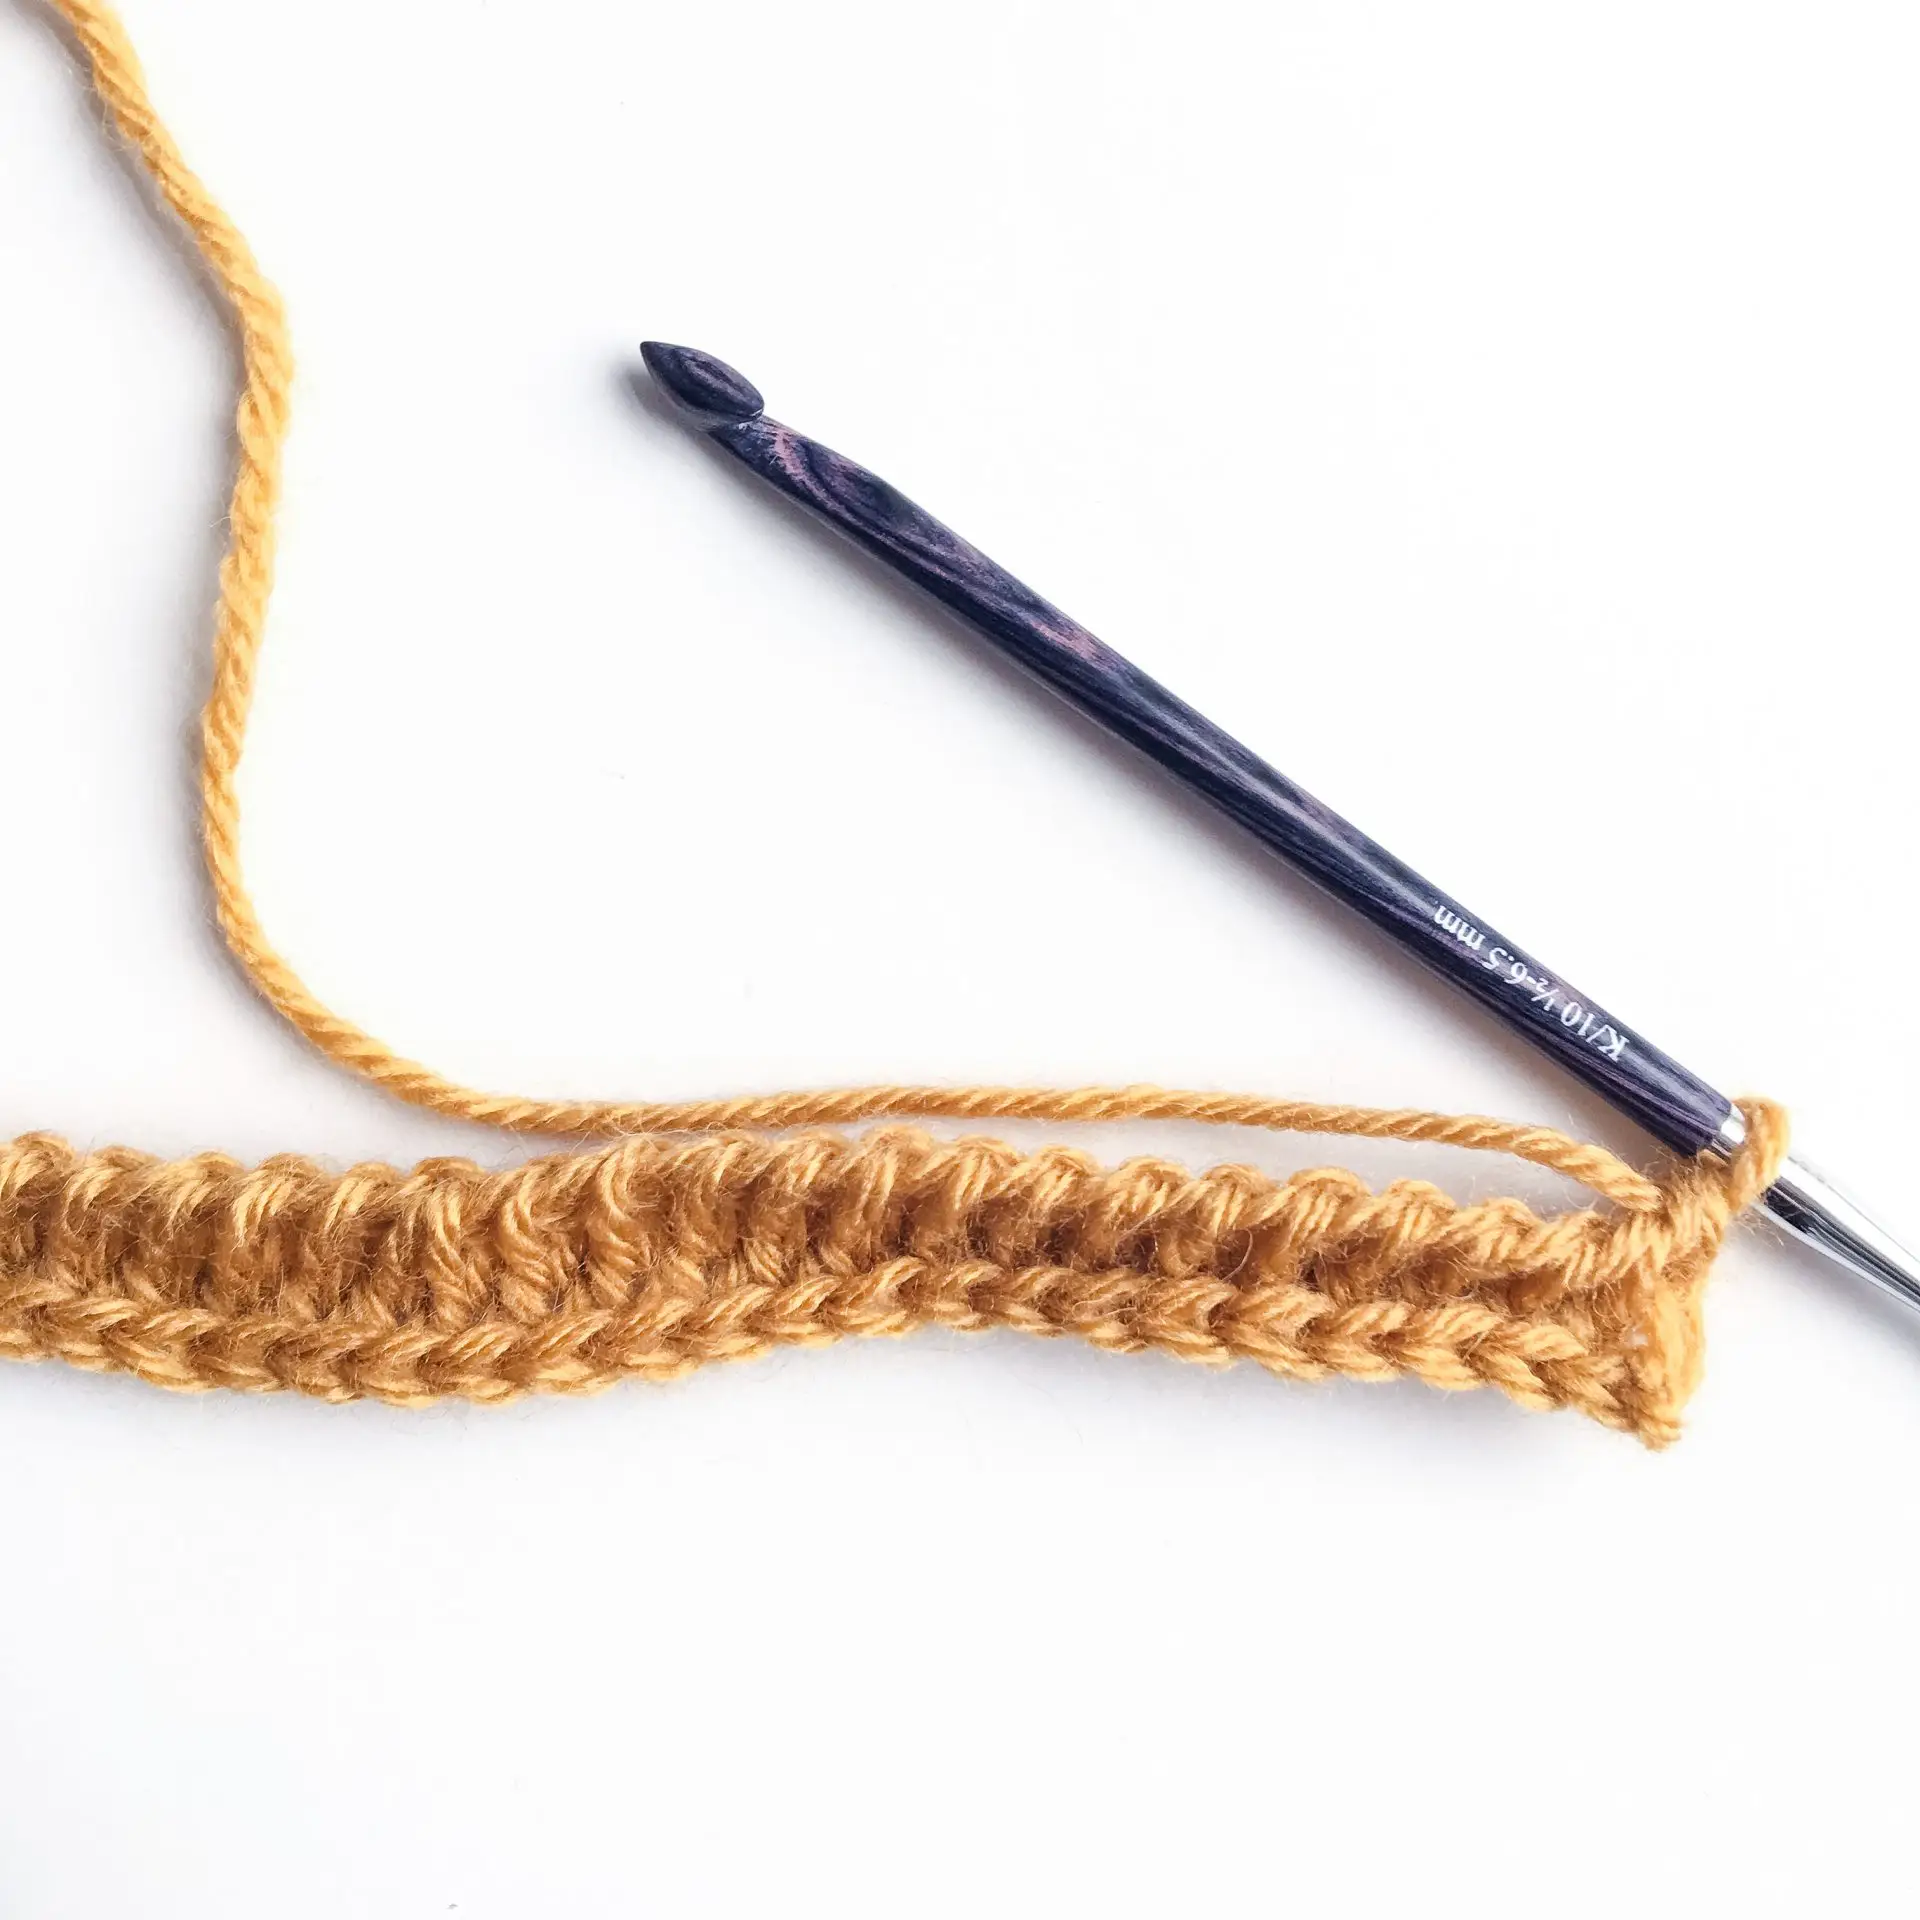 Tunisian Crochet Knit Stitch Tutorial